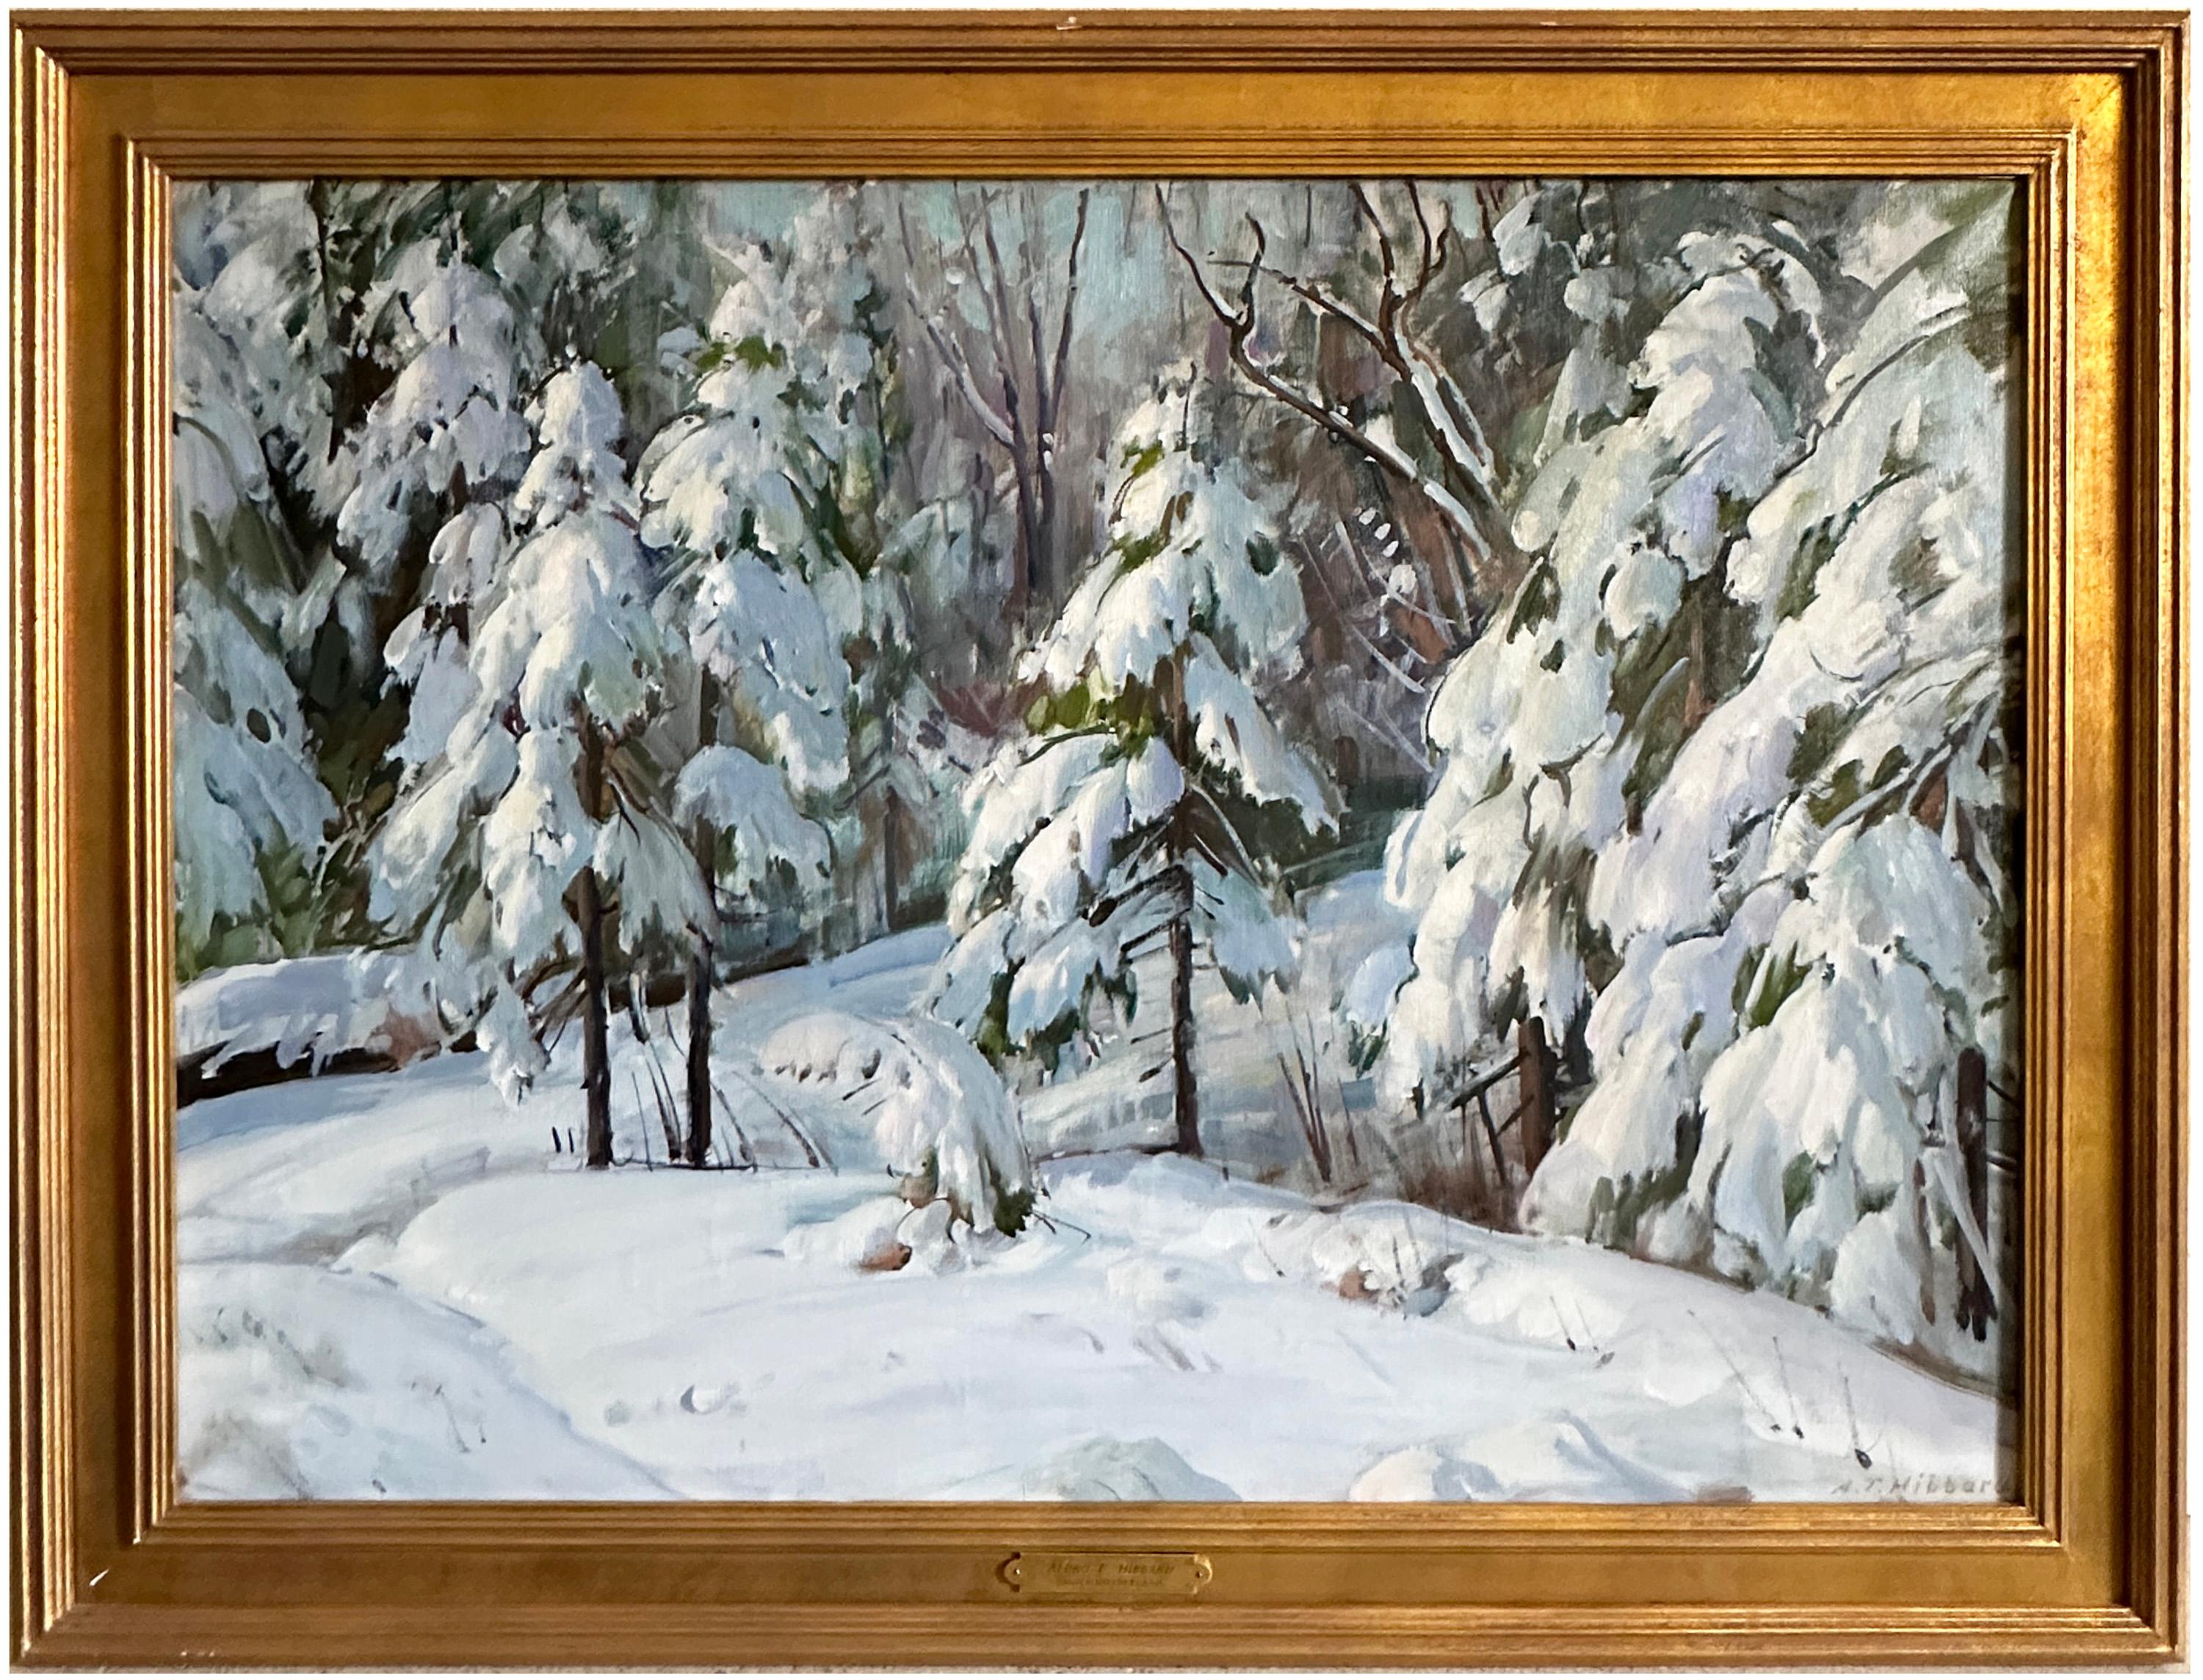 Winter Wonderland - Painting by Aldro Thompson Hibbard